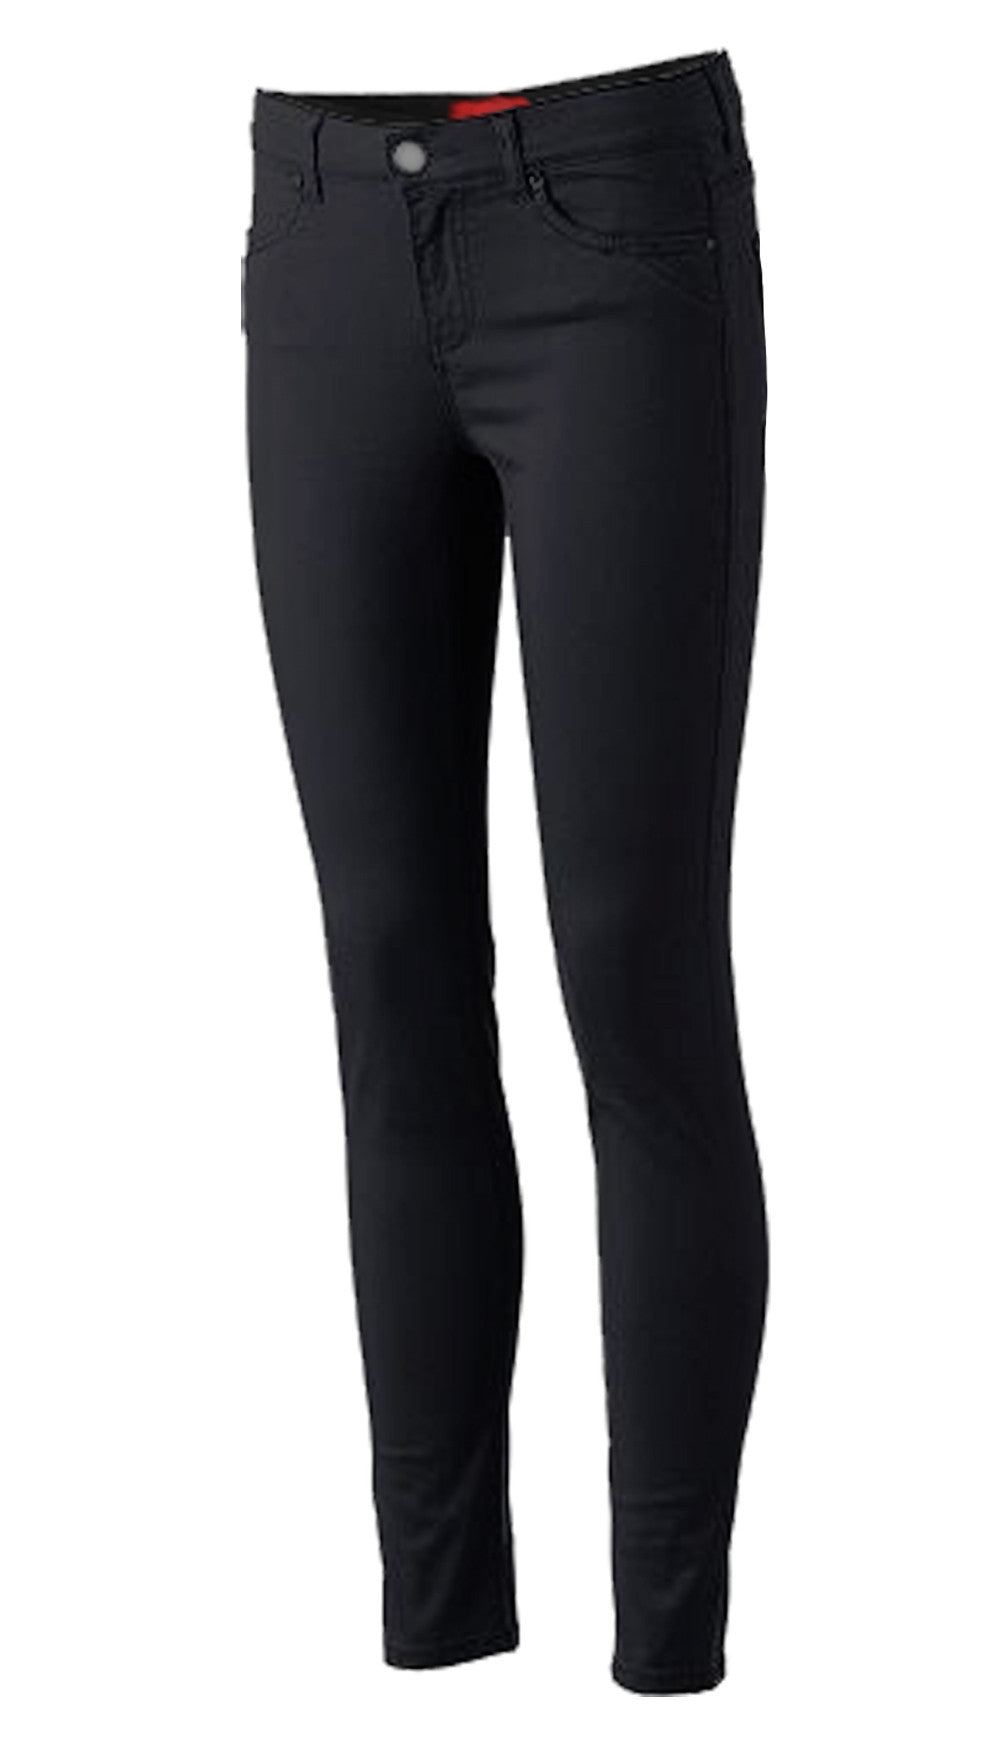 Girls black Skinny Pants (Sizes 4-14): Comfy cotton blend with 3% spandex. Adjustable waist for ideal fit. Sleek skinny leg. Colors: Navy, Khaki, Black. Style: LGSK80.